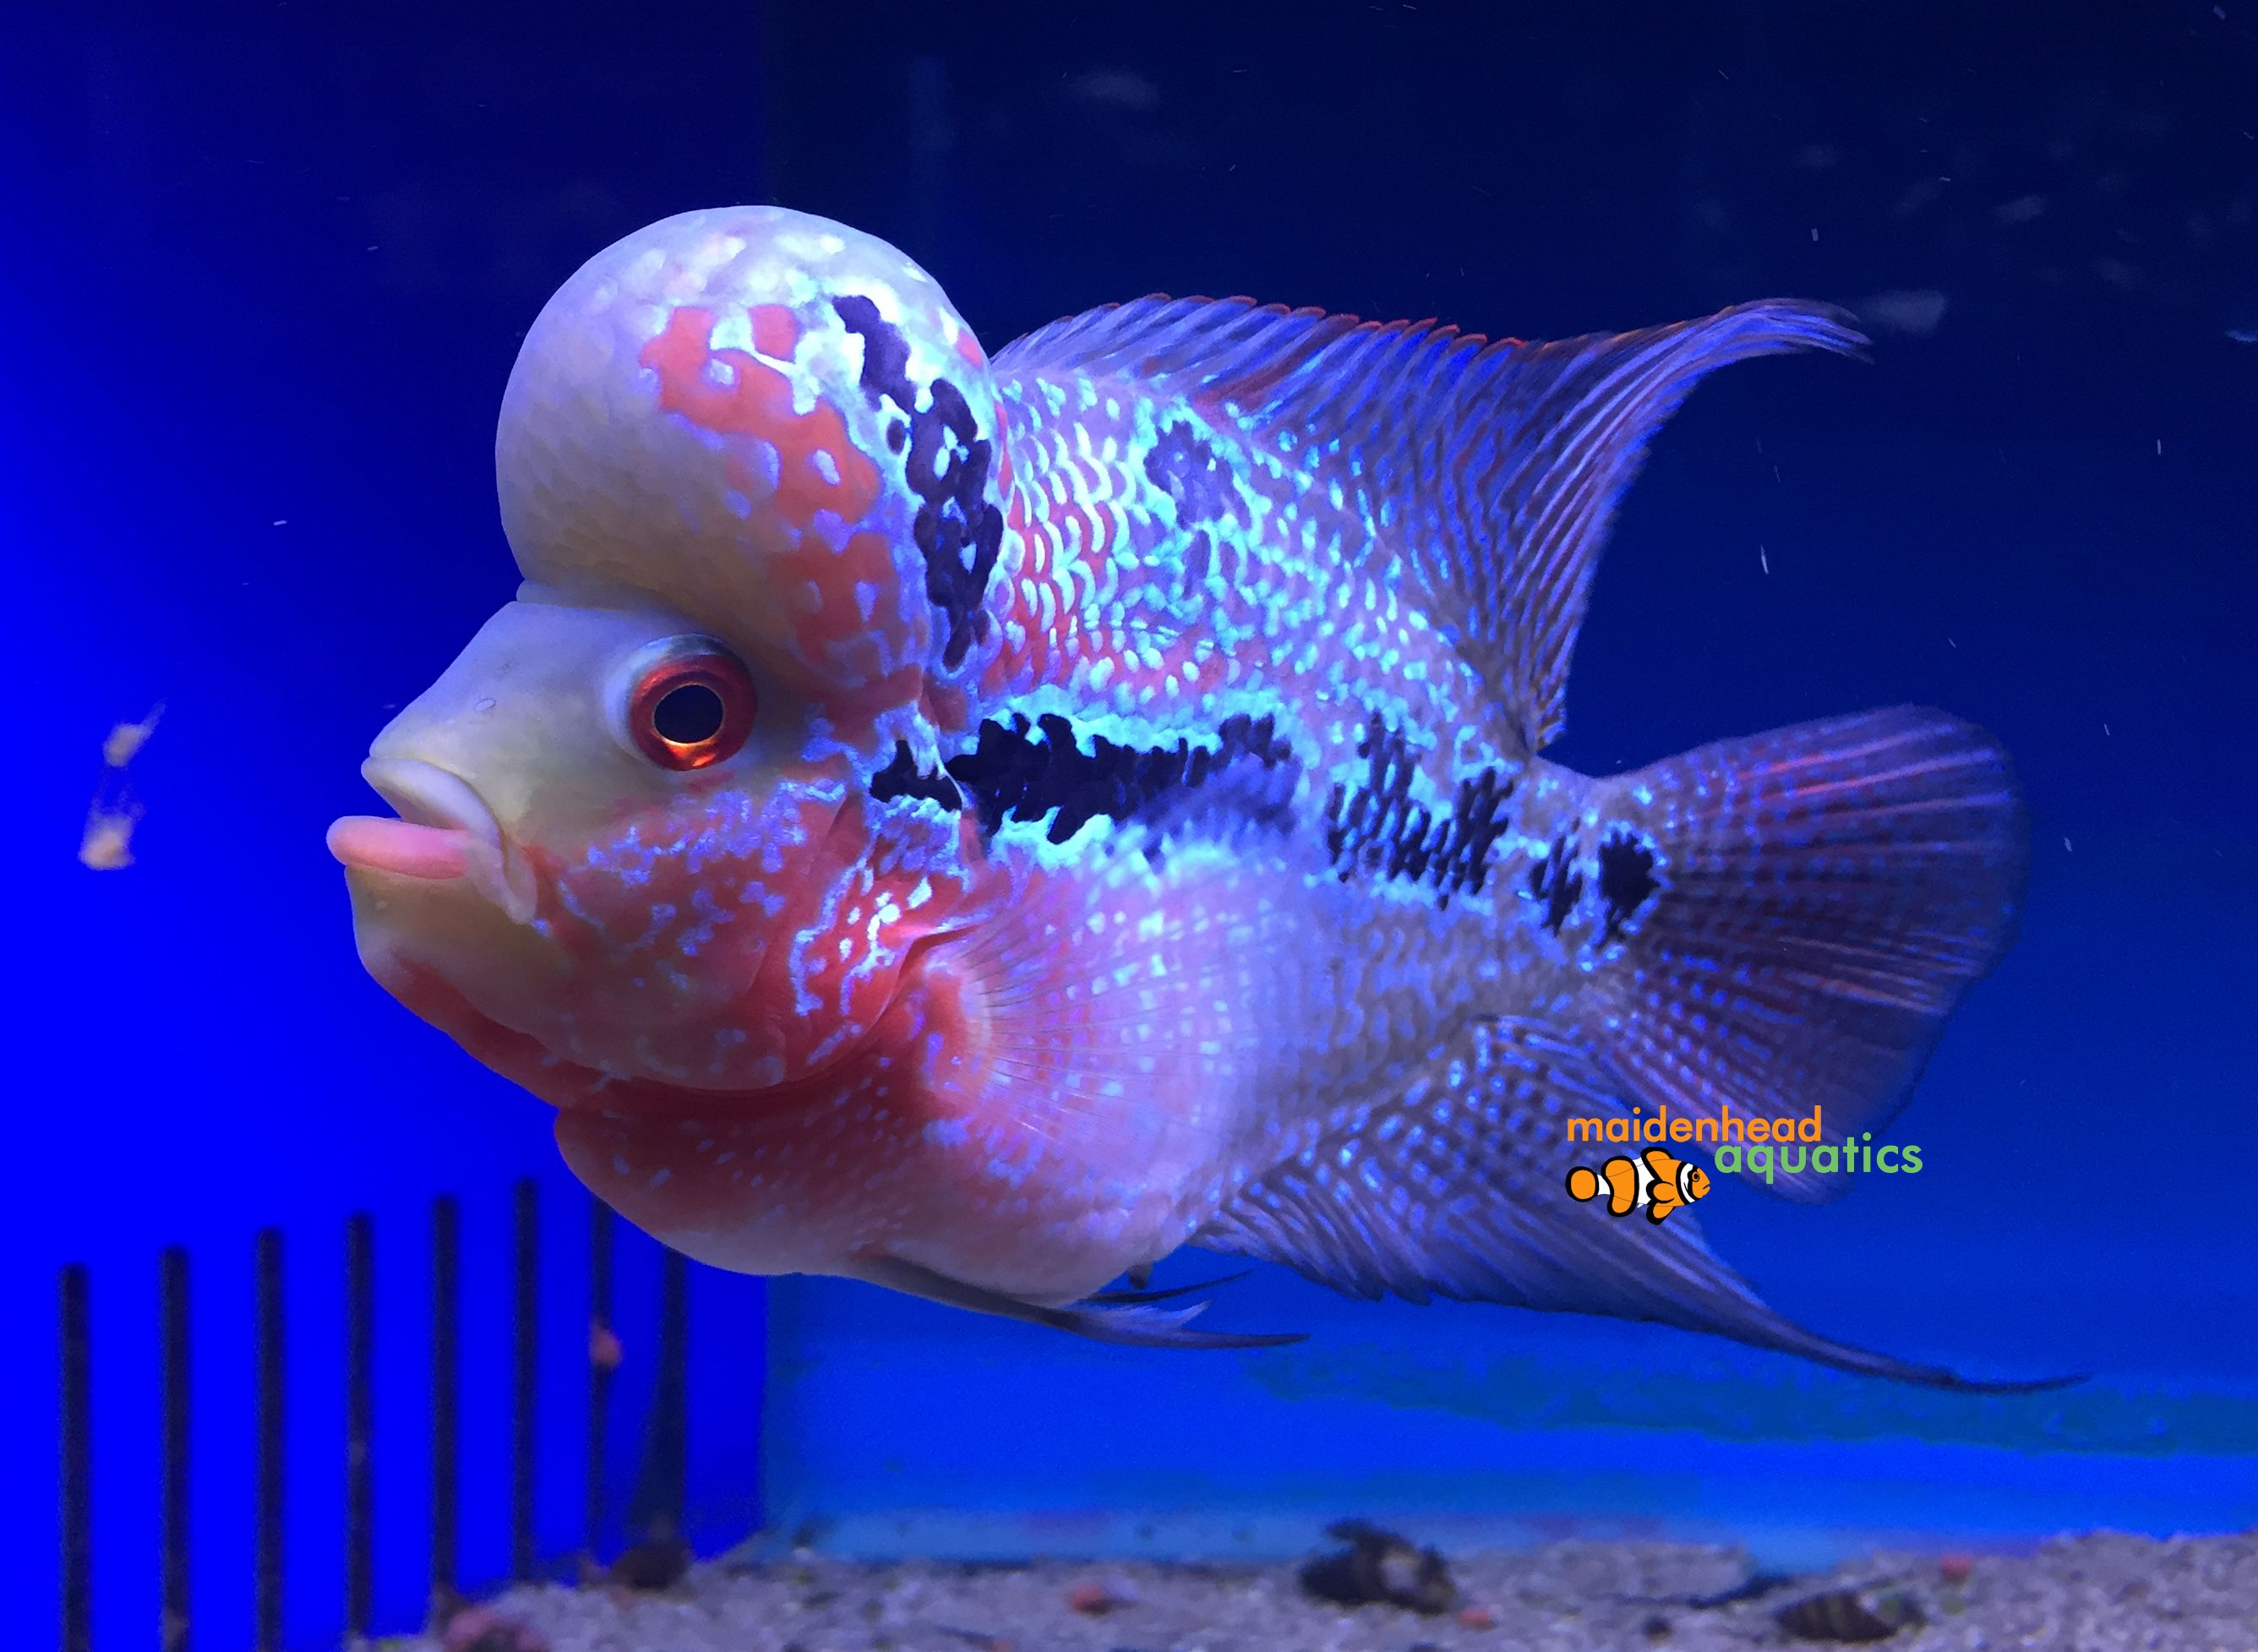 Flowerhorn Cichlid Aquarium Care Notes: Fish Keeper Maintenance